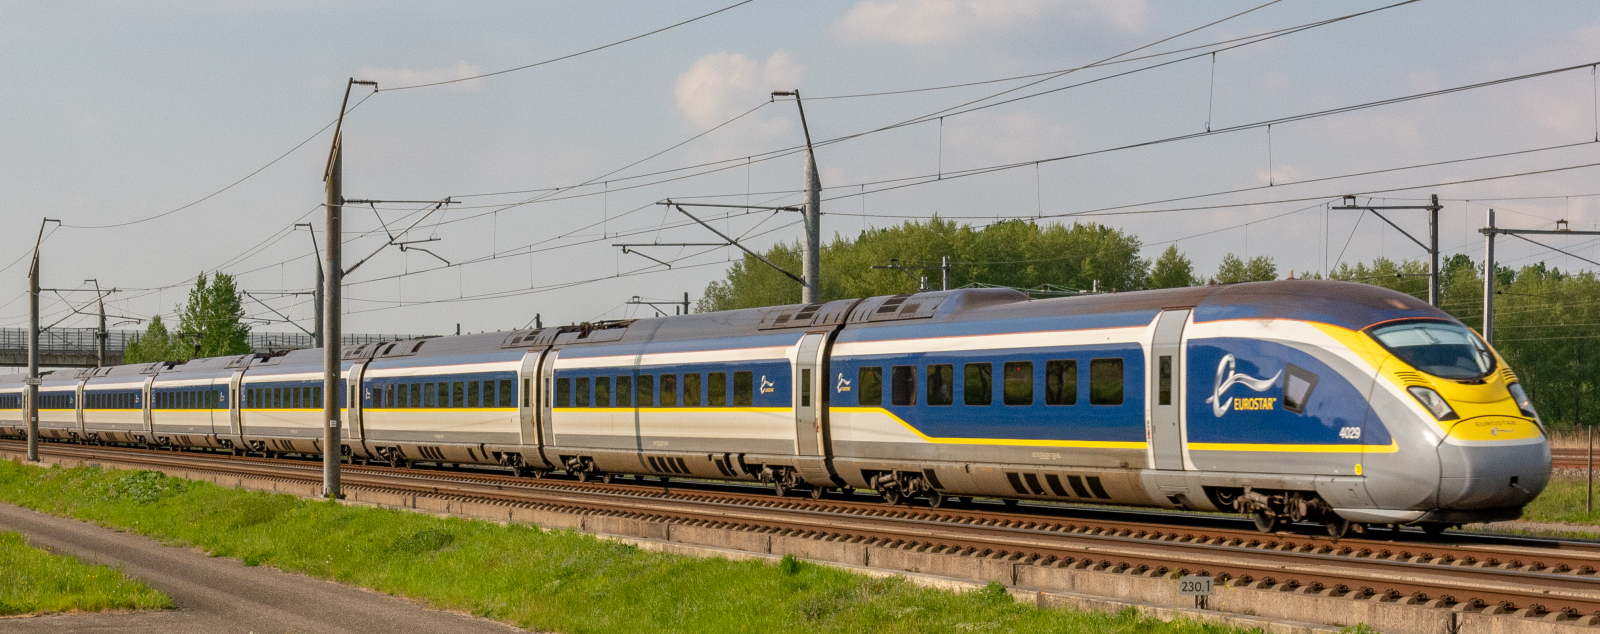 Eurostar 320 in April 2019 at Lage Zwaluwe, The Netherlands